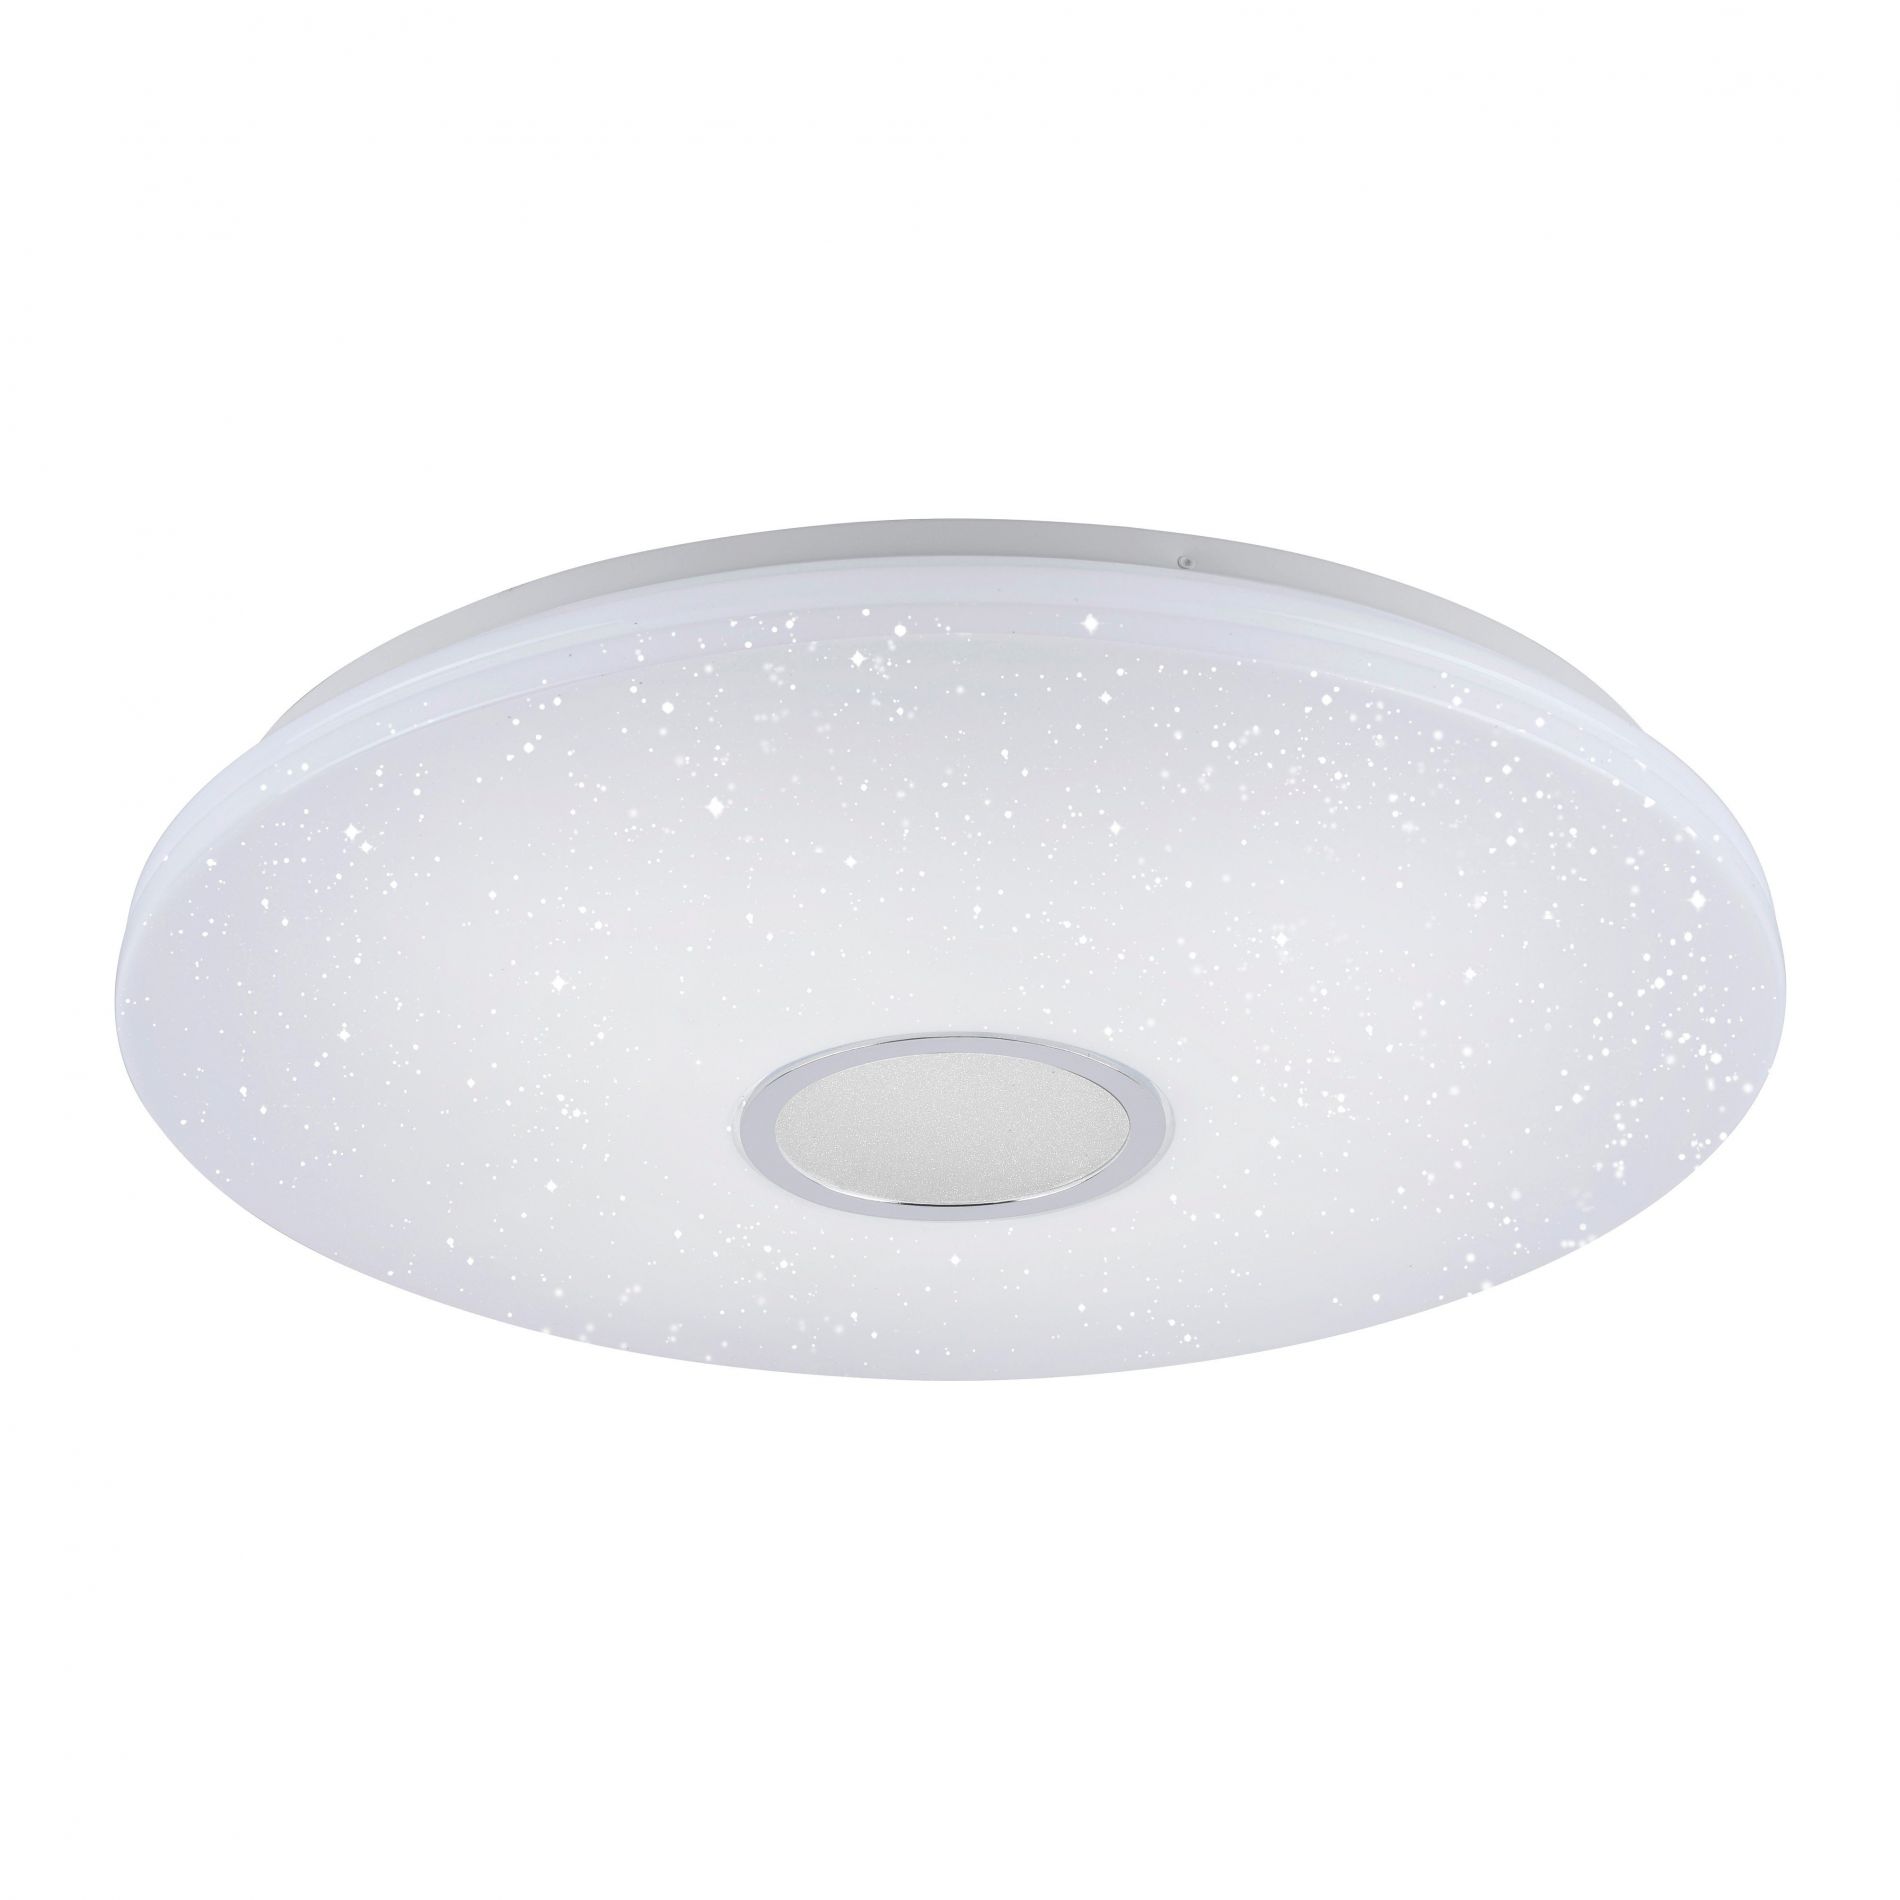 Plafonnier LED design JONAS blanc en PVC